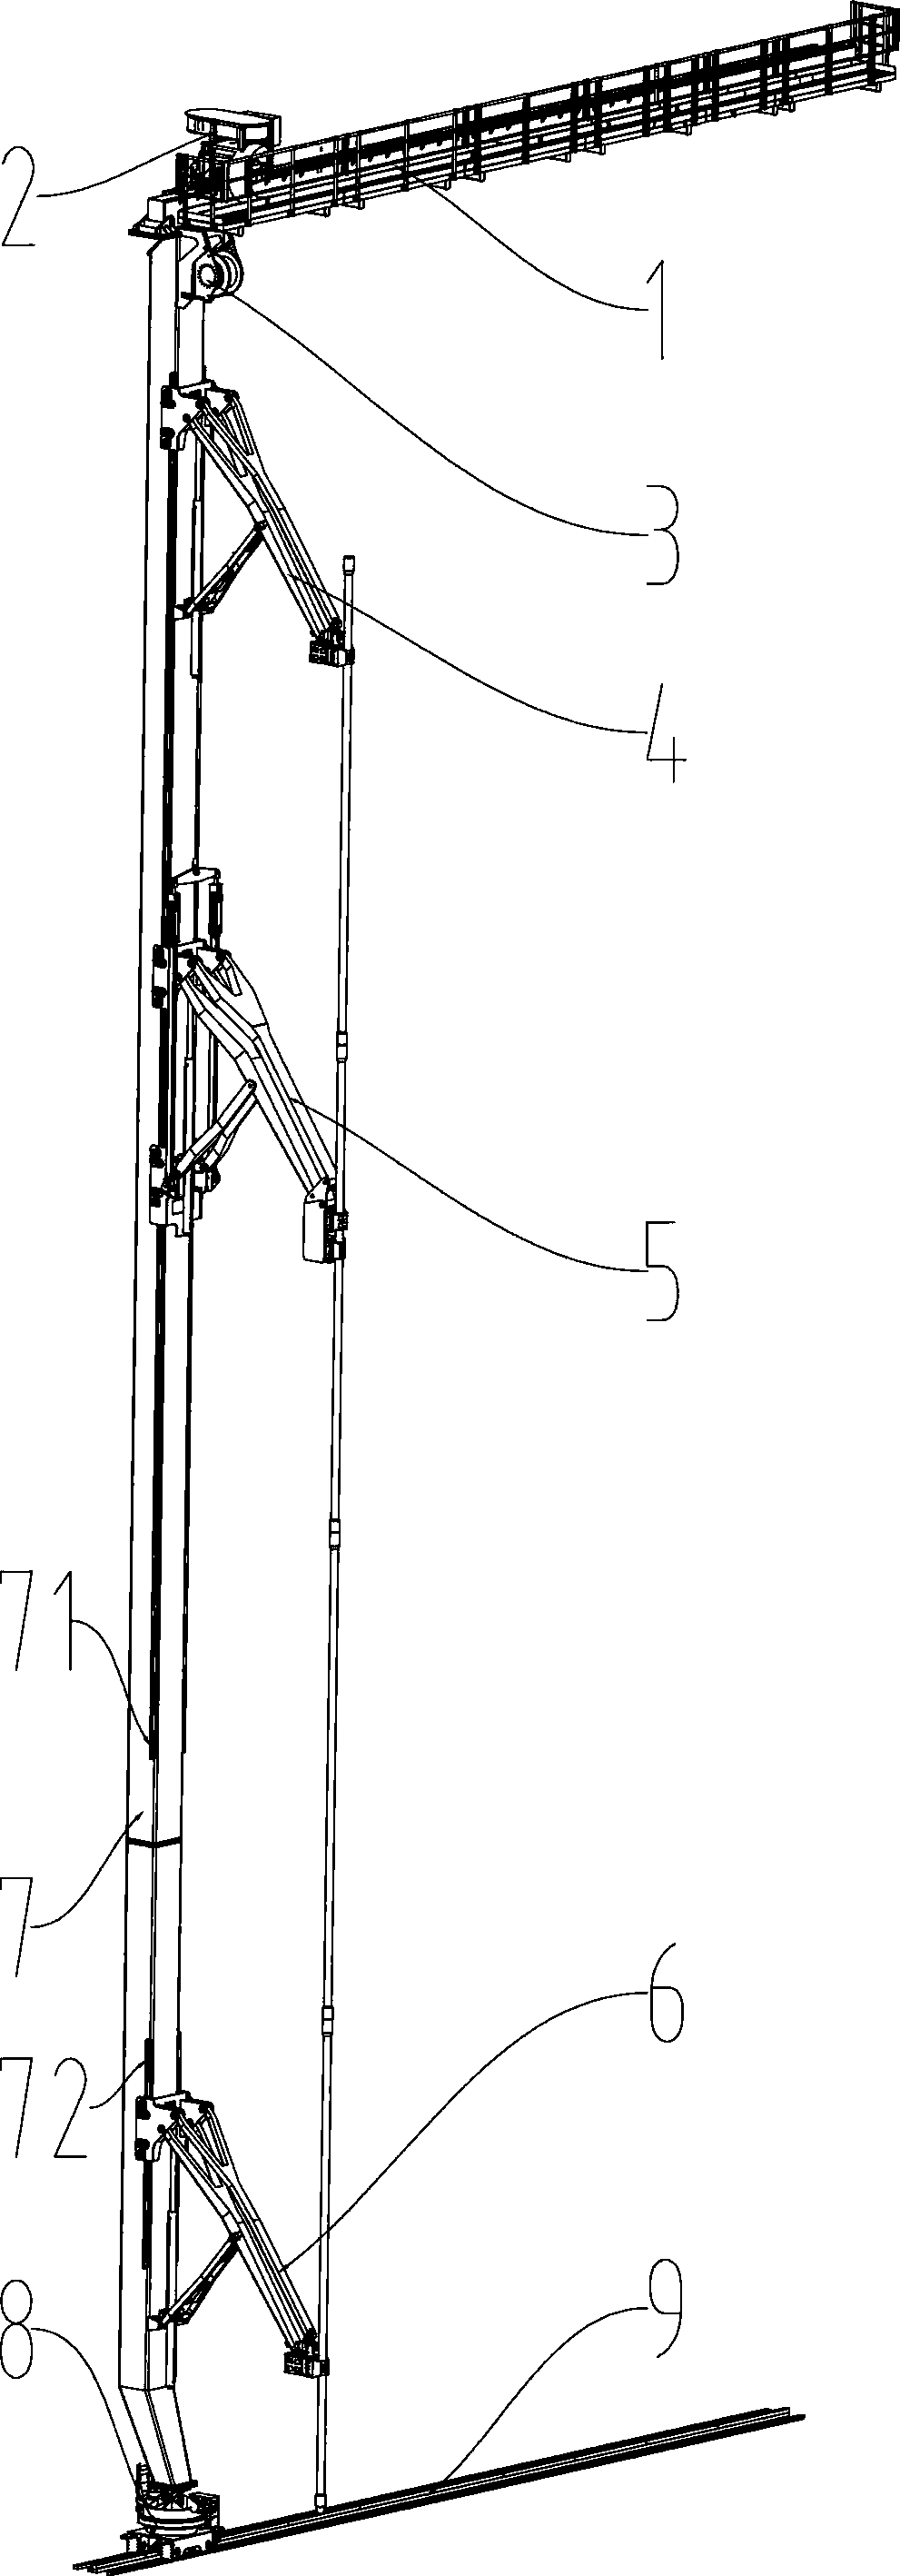 Pipe alignment machine